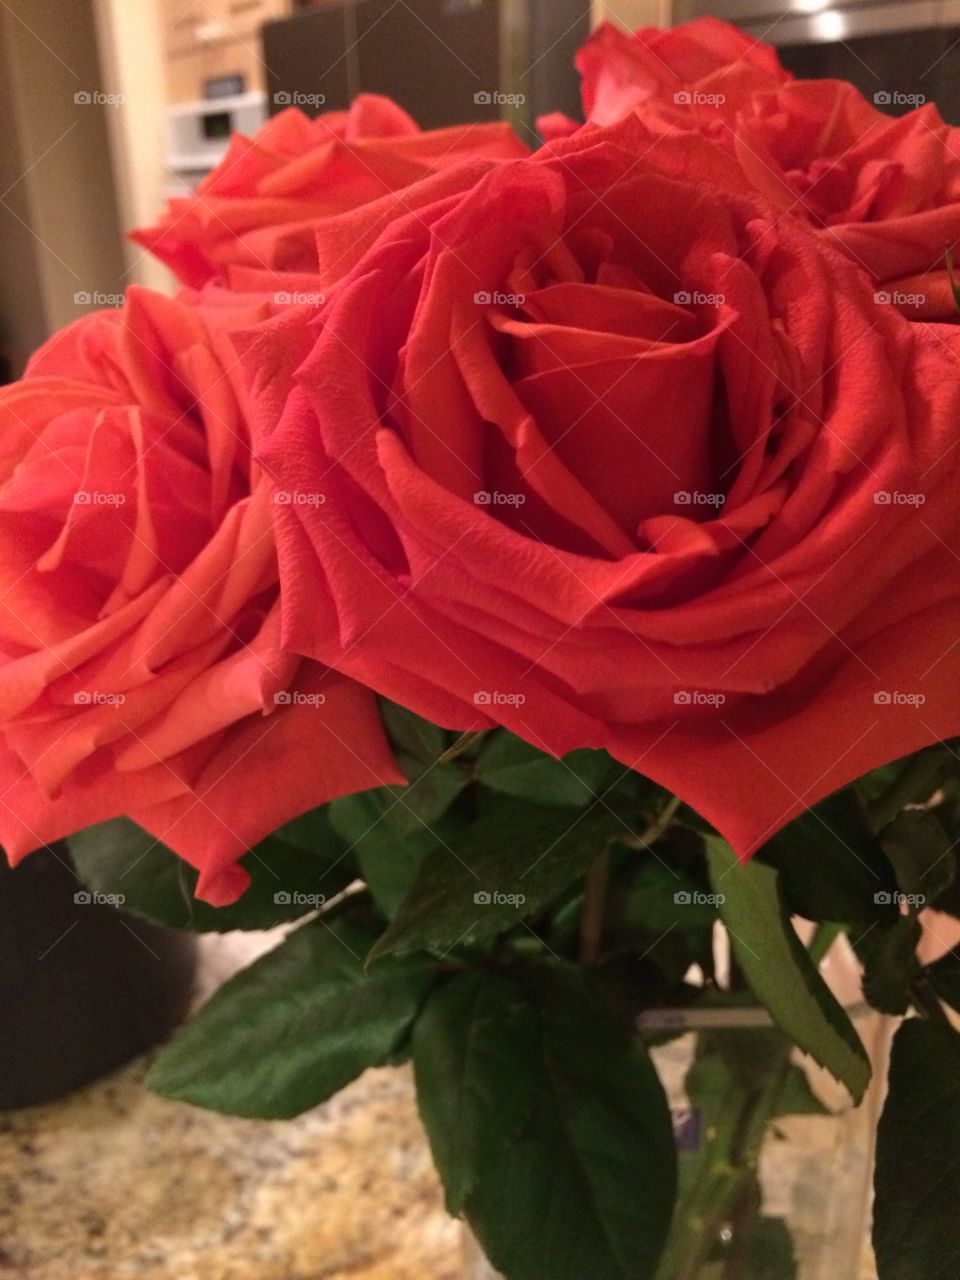 Rose, Flower, No Person, Love, Romance